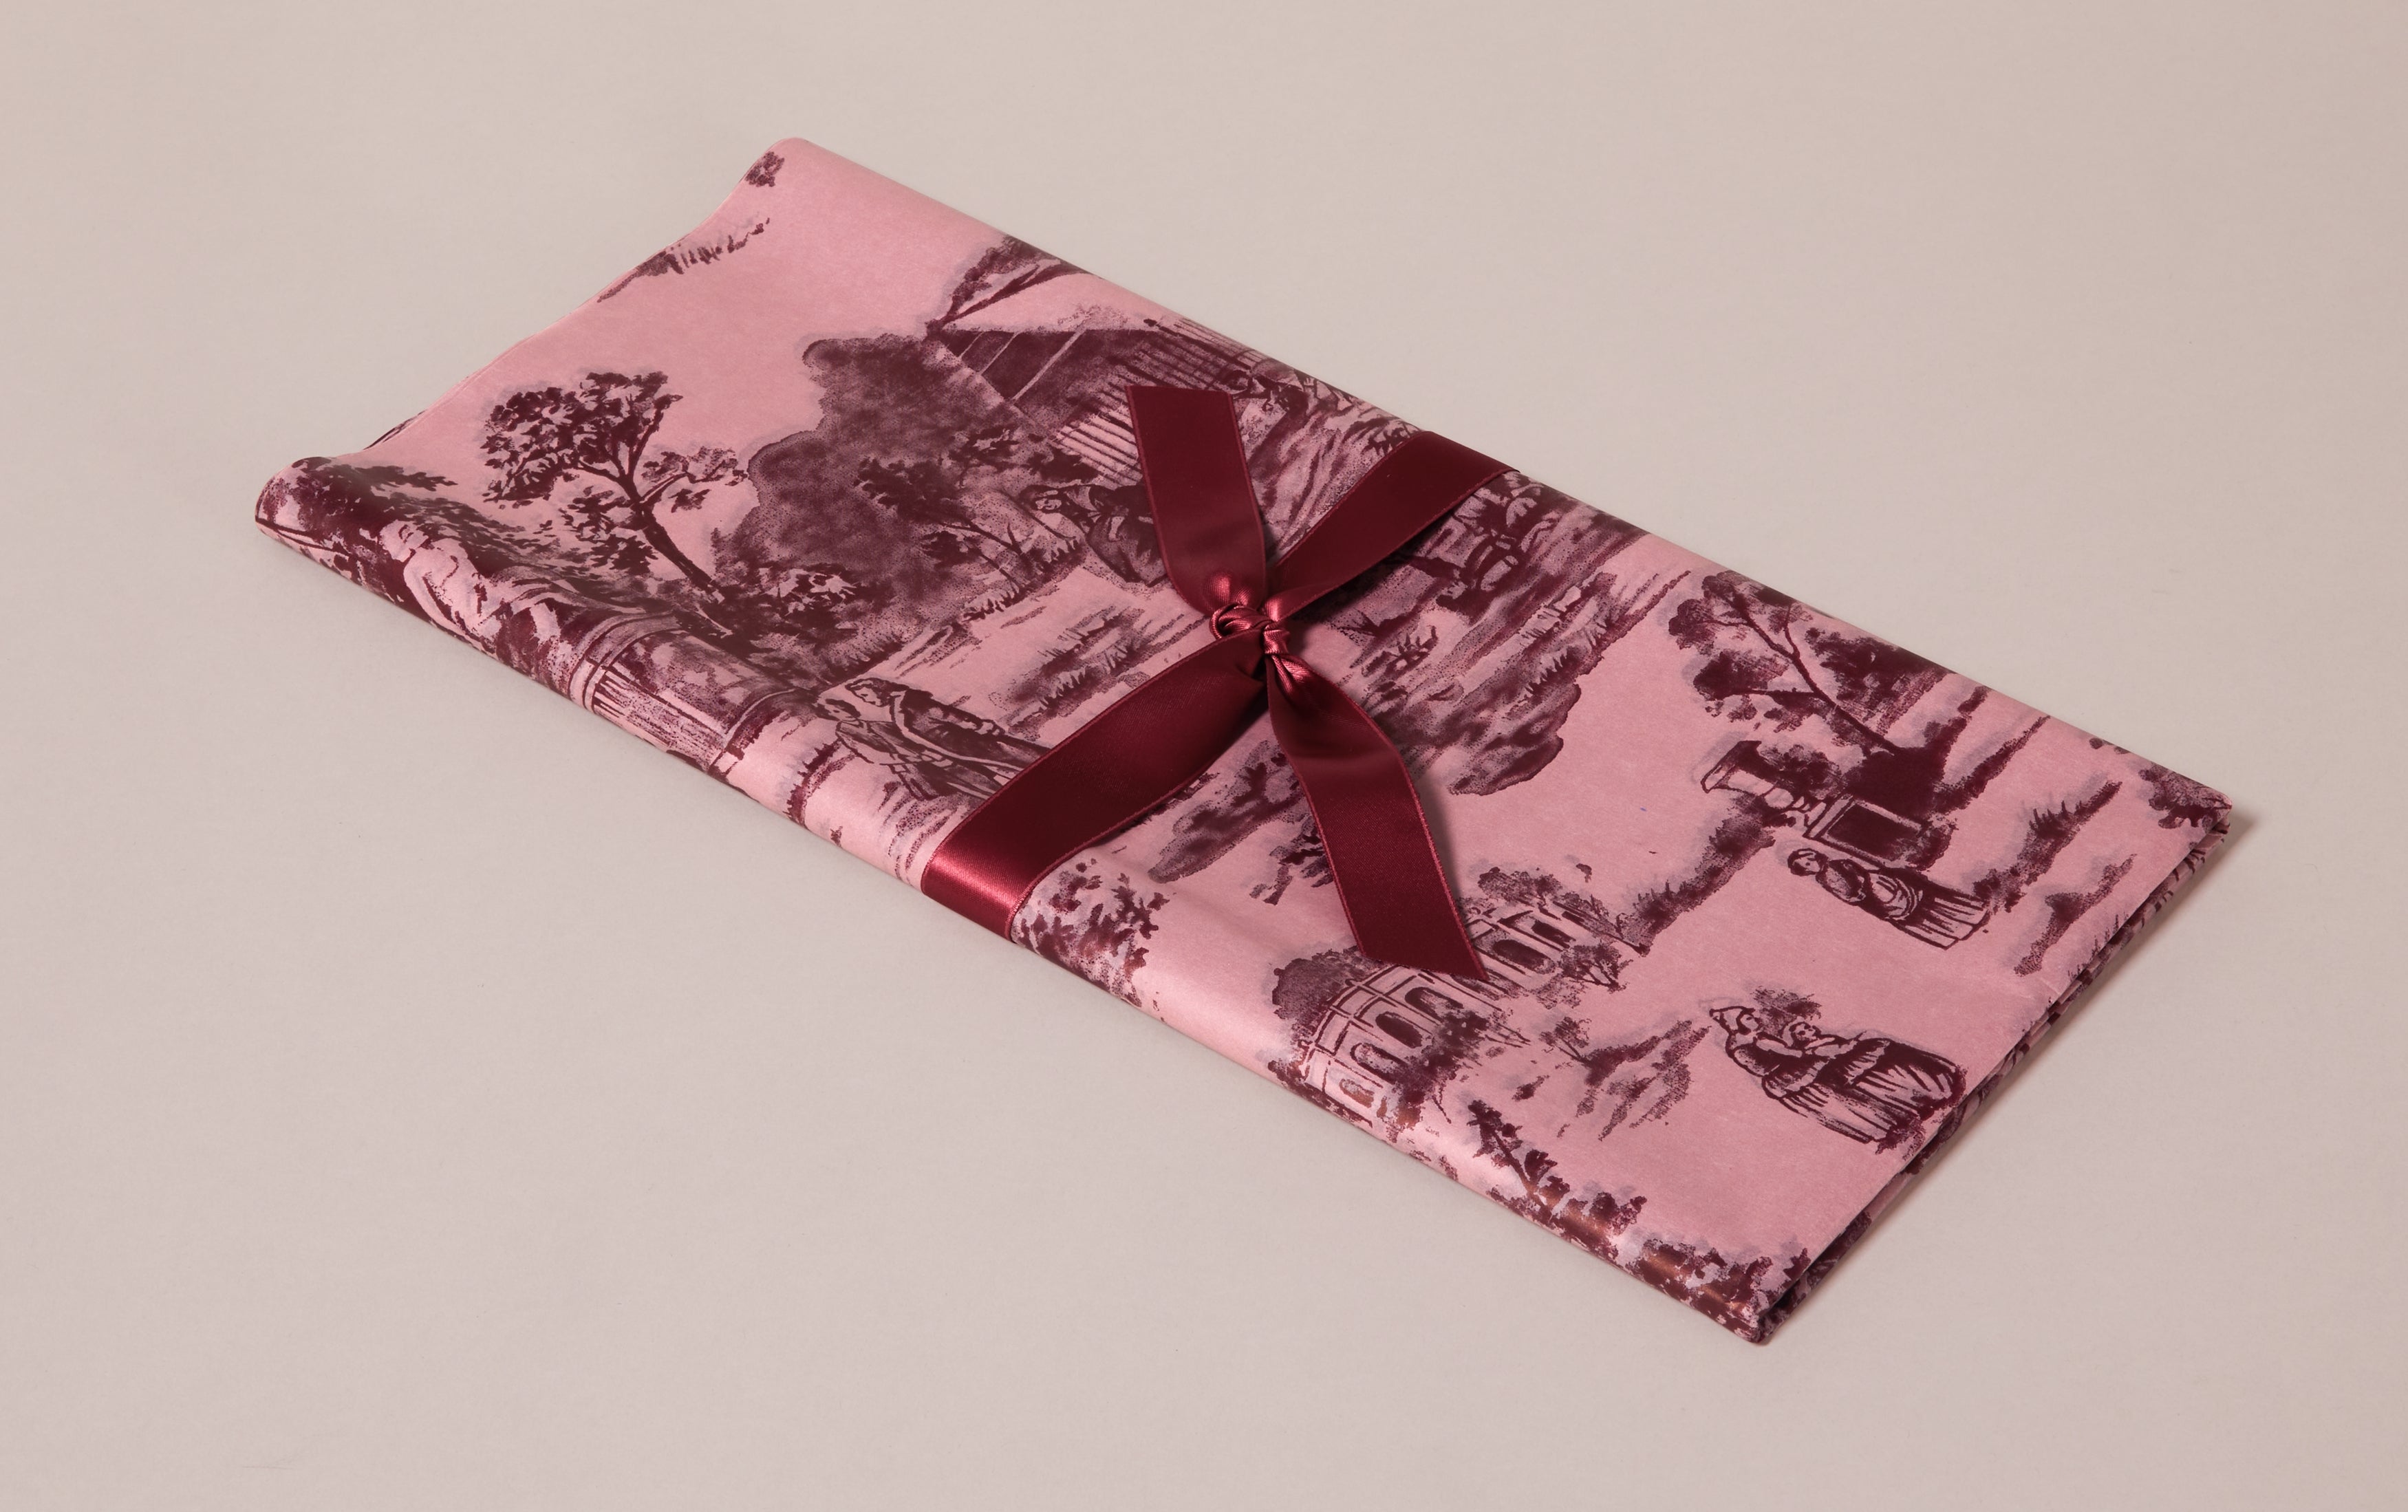 Toile De Jouy Tissue Paper 25 pack, Red – Choosing Keeping